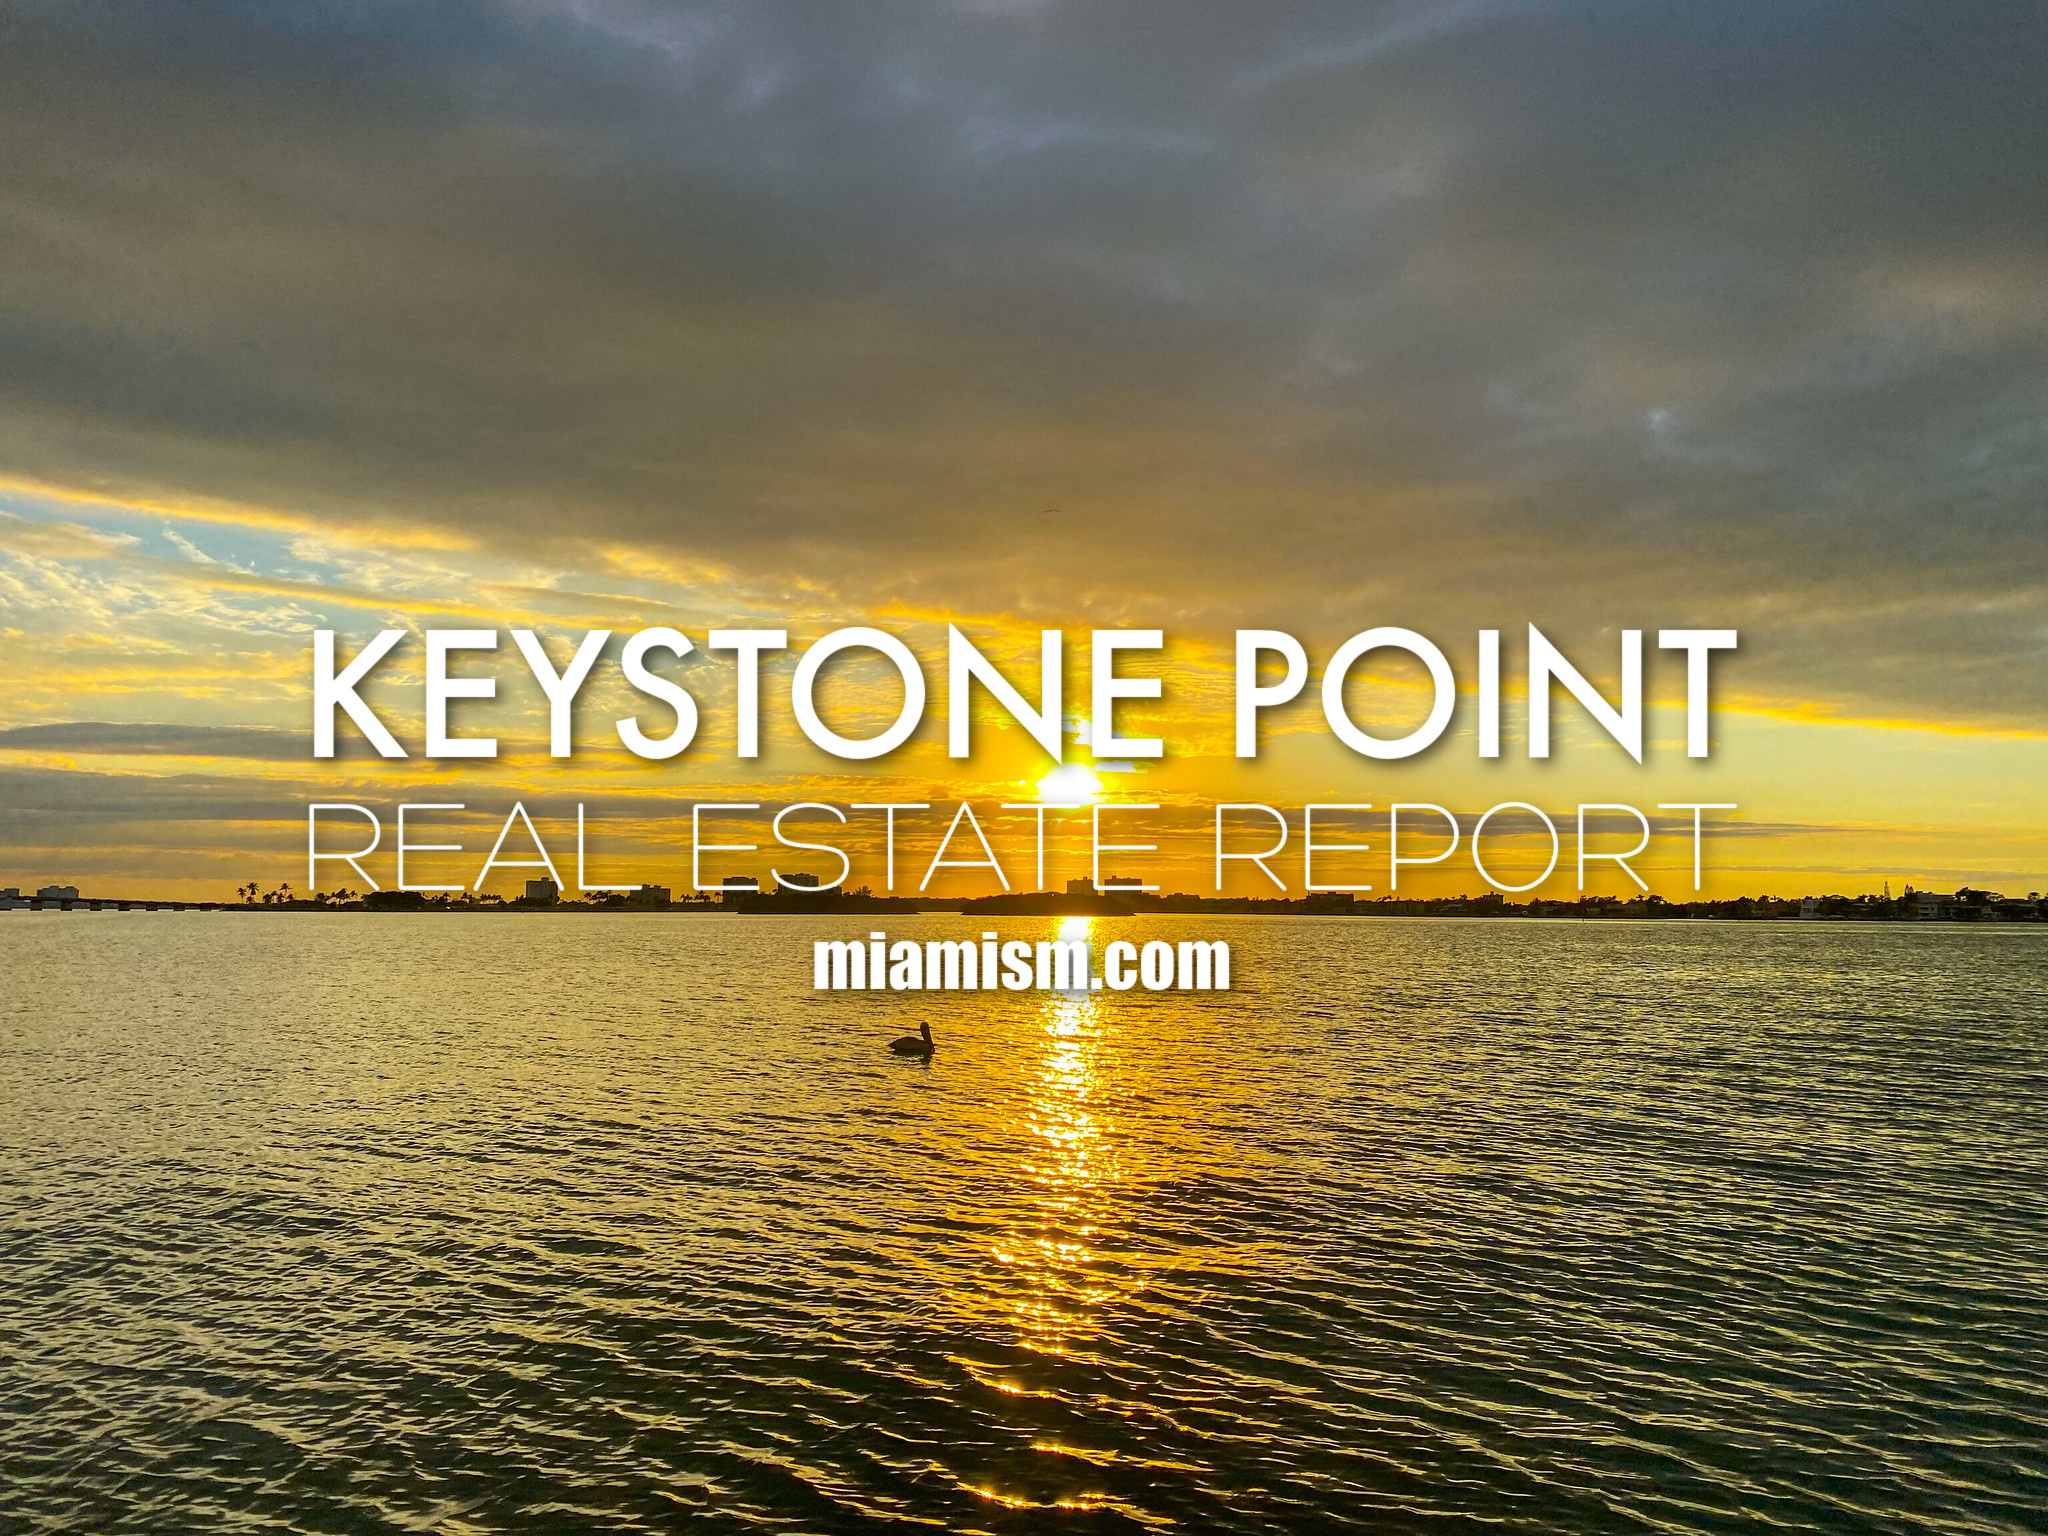 Keystone Point, Florida - real estate market report via miamism